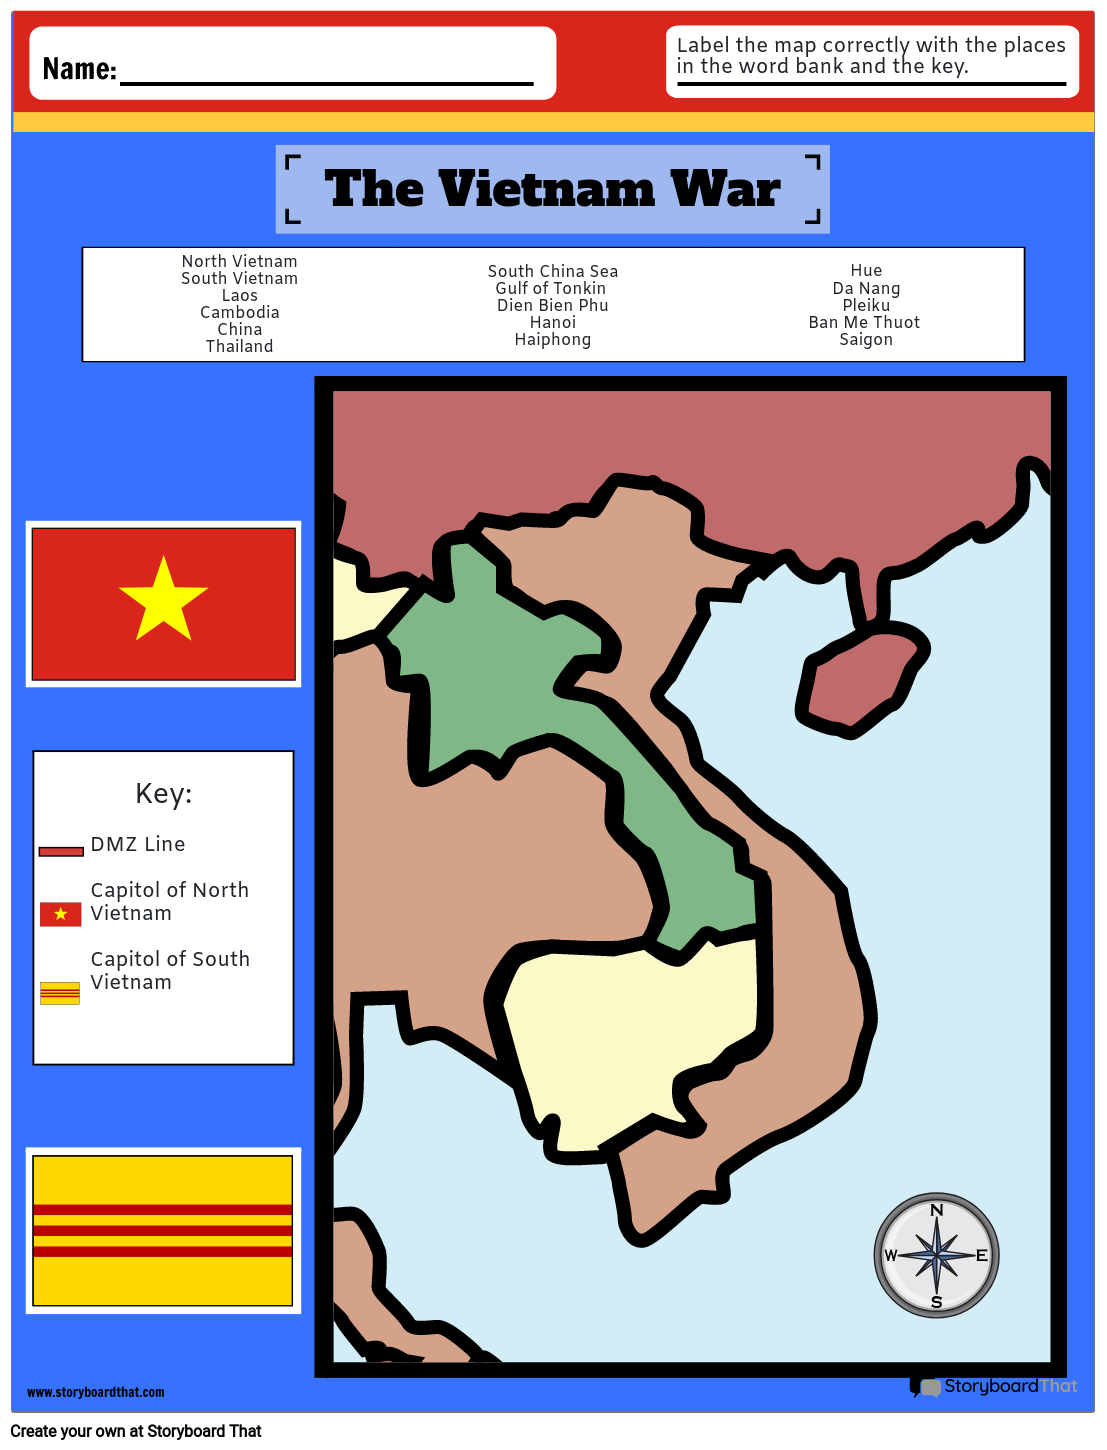 vietnam-war-map-activity-historical-sites-events